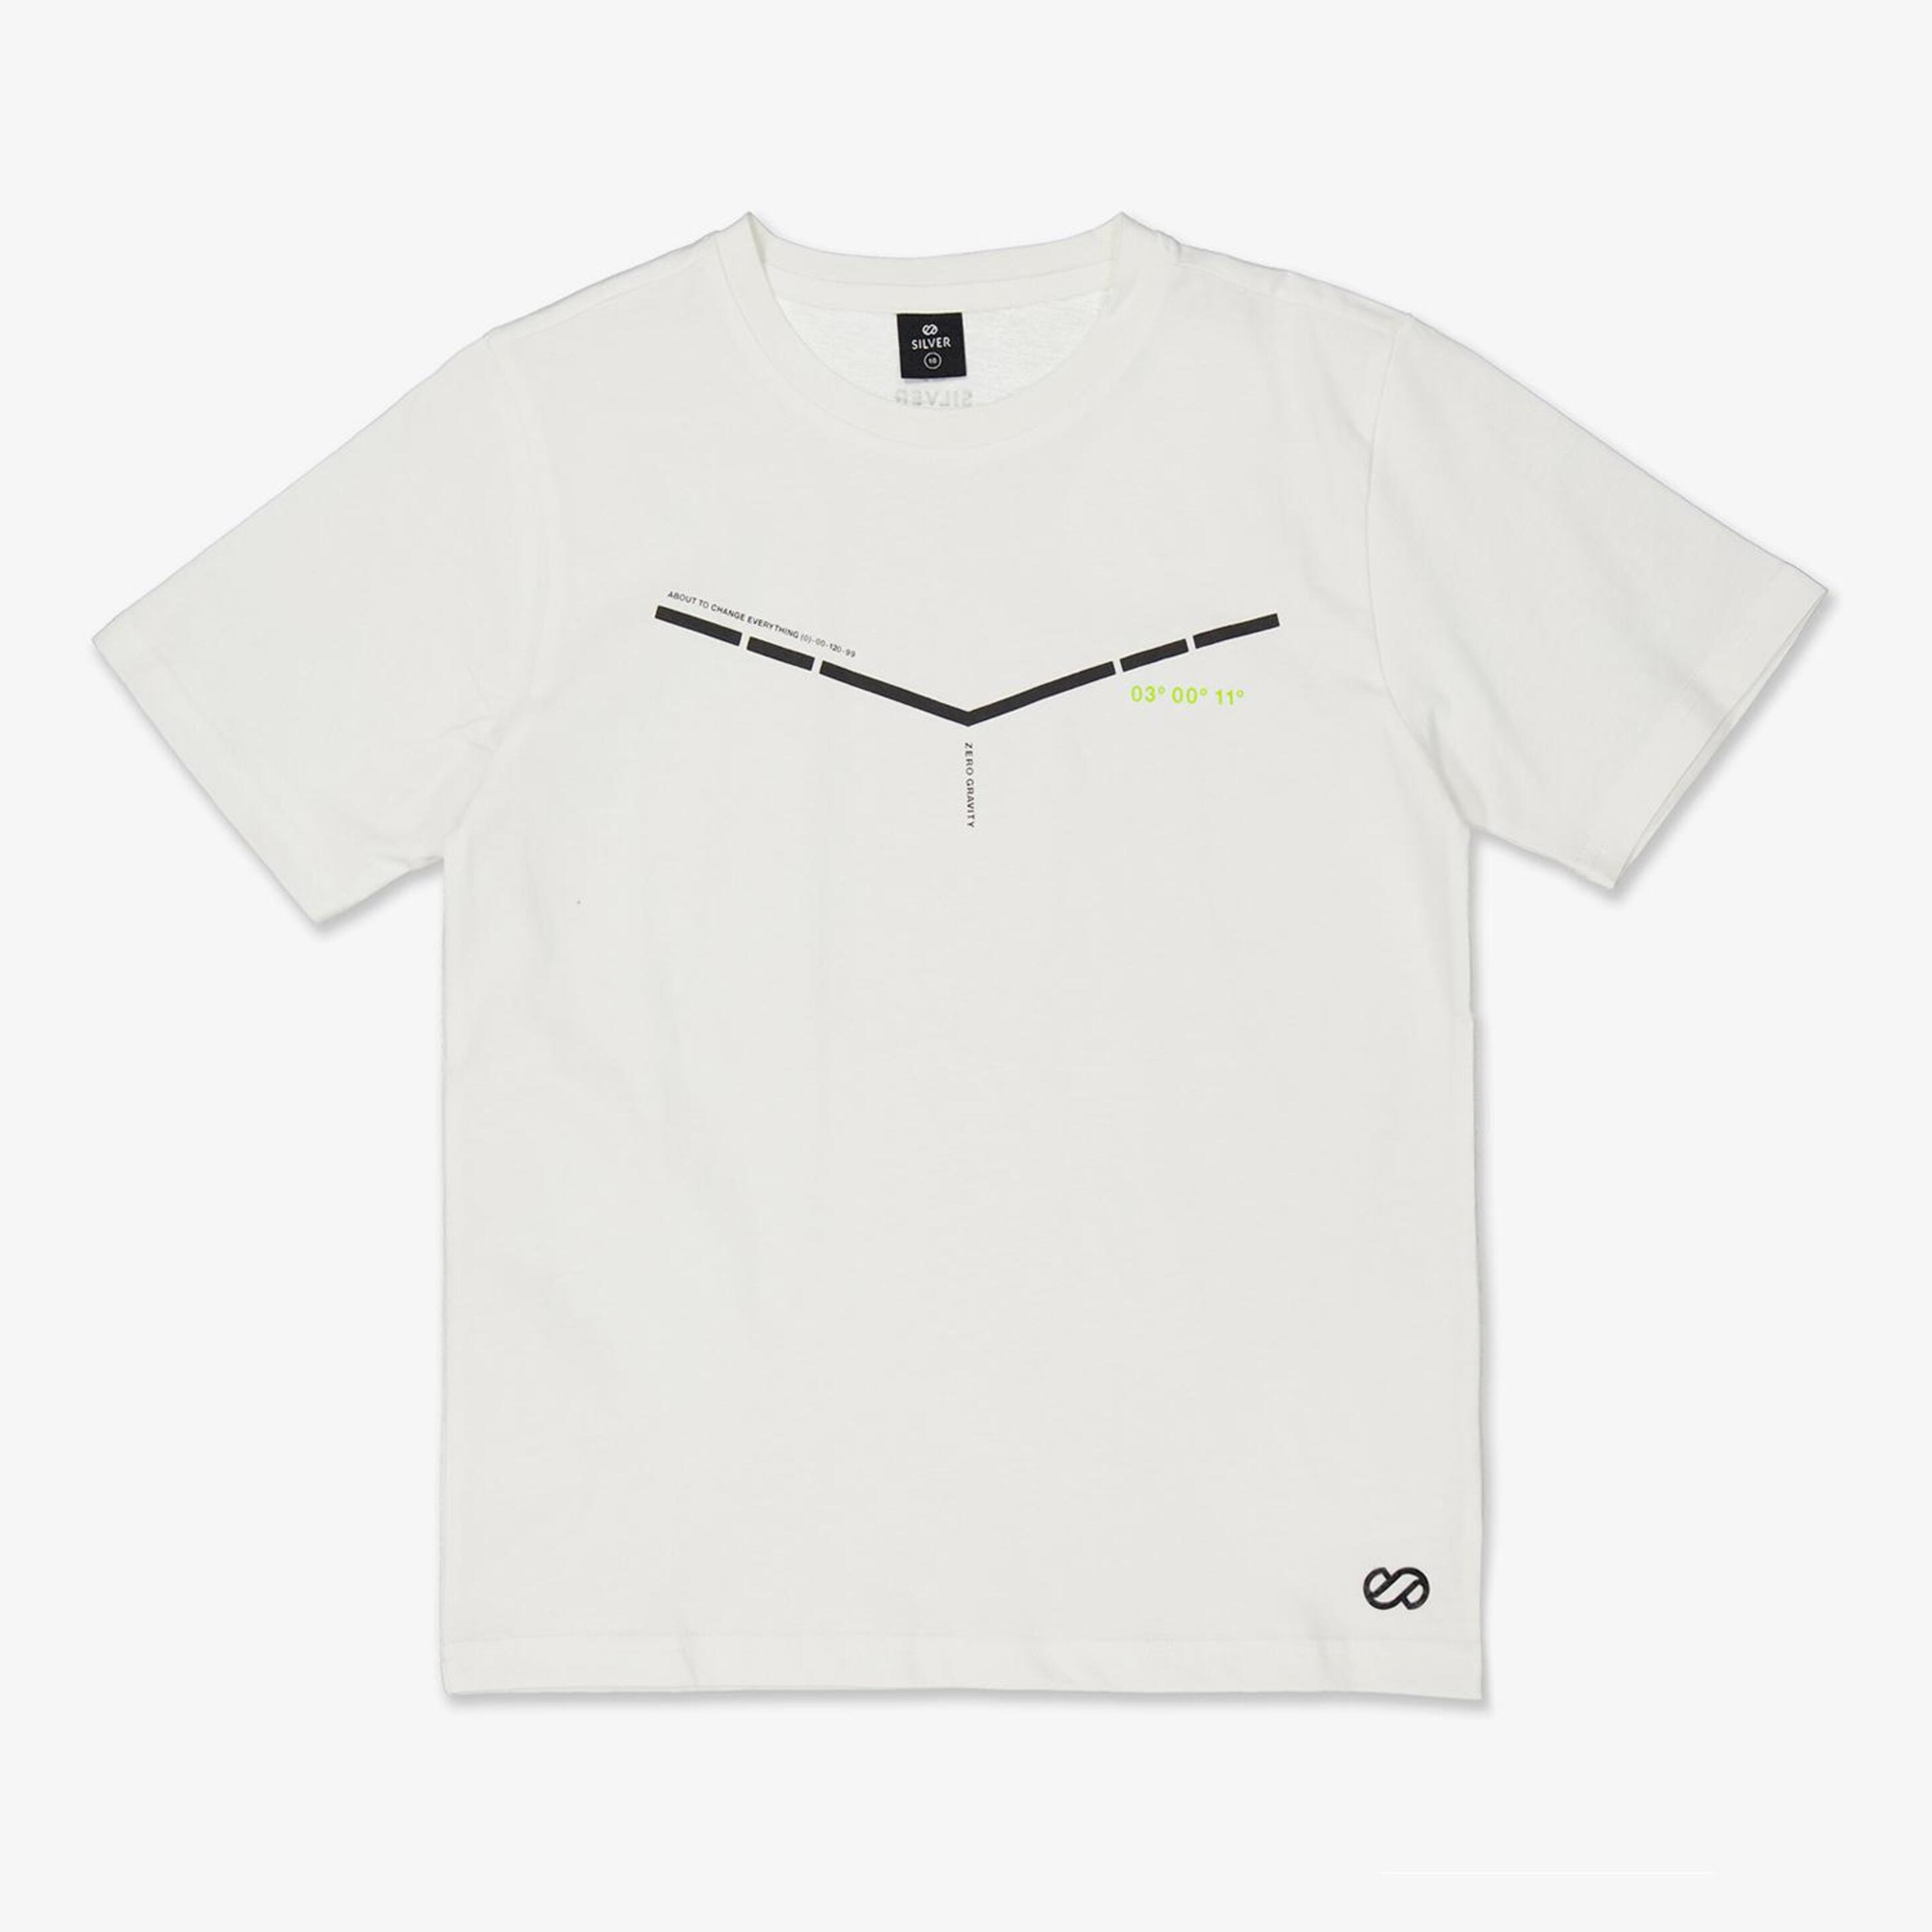 Silver Unlimited - blanco - Camiseta Niño